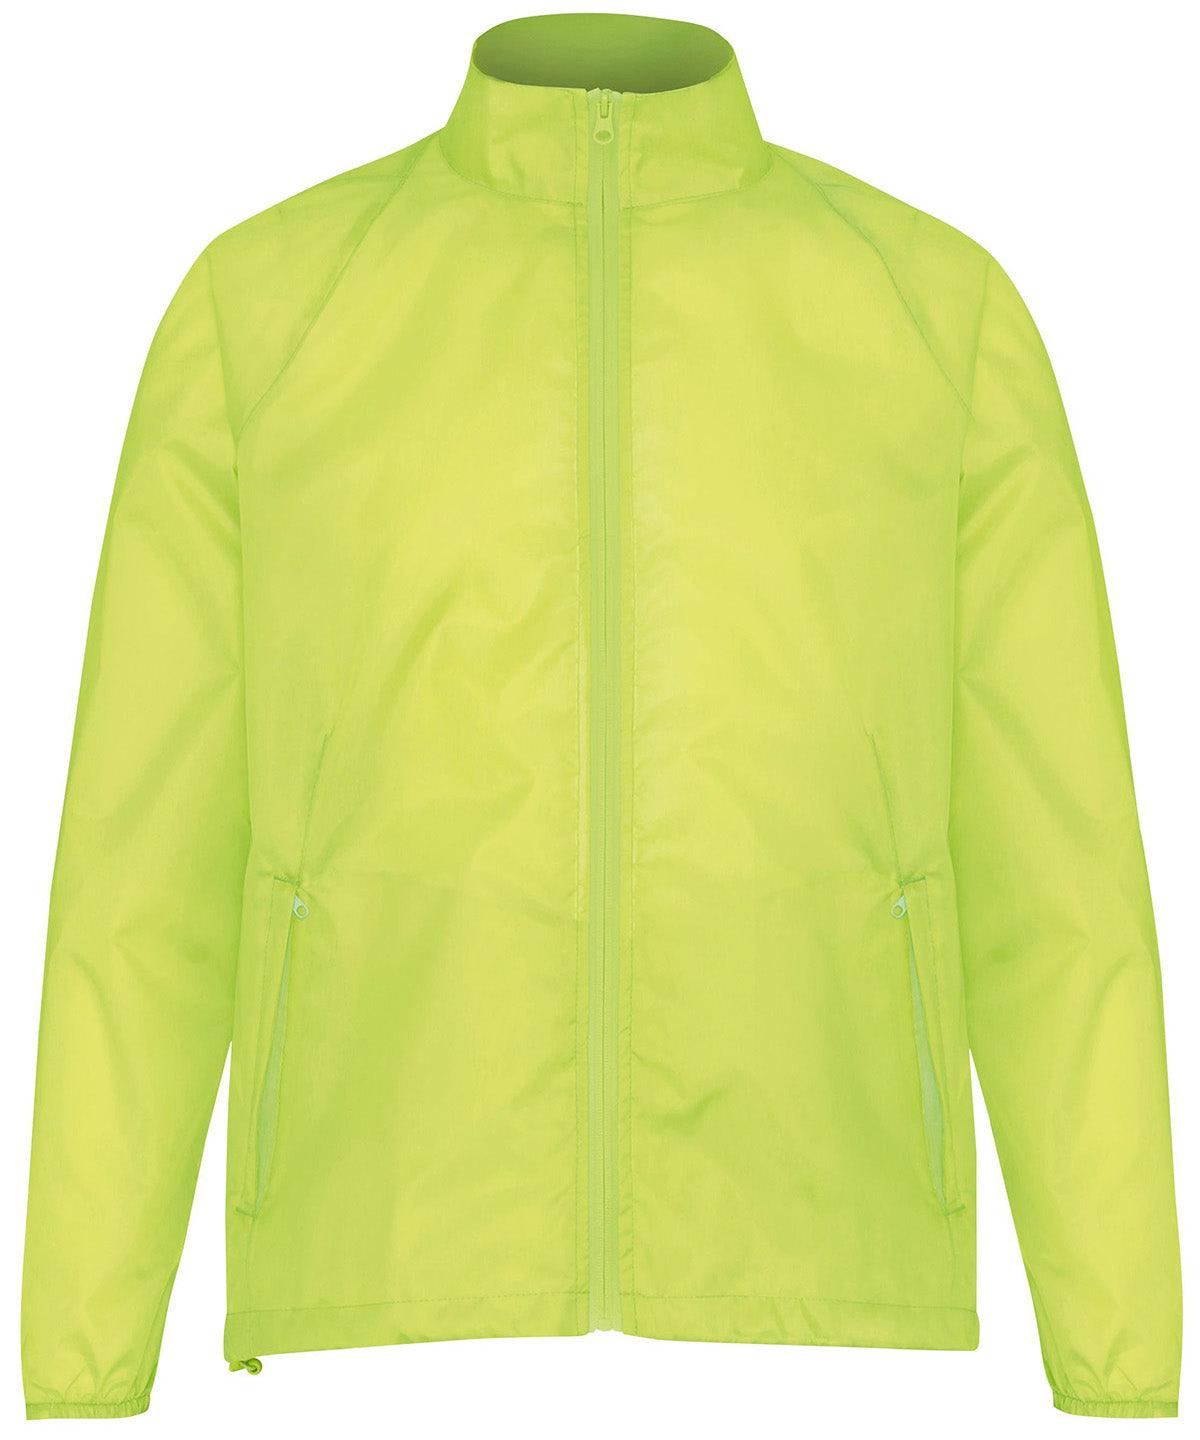 Hot Pink - Lightweight jacket Jackets 2786 Alfresco Dining, Jackets & Coats, Lightweight layers, Rebrandable Schoolwear Centres